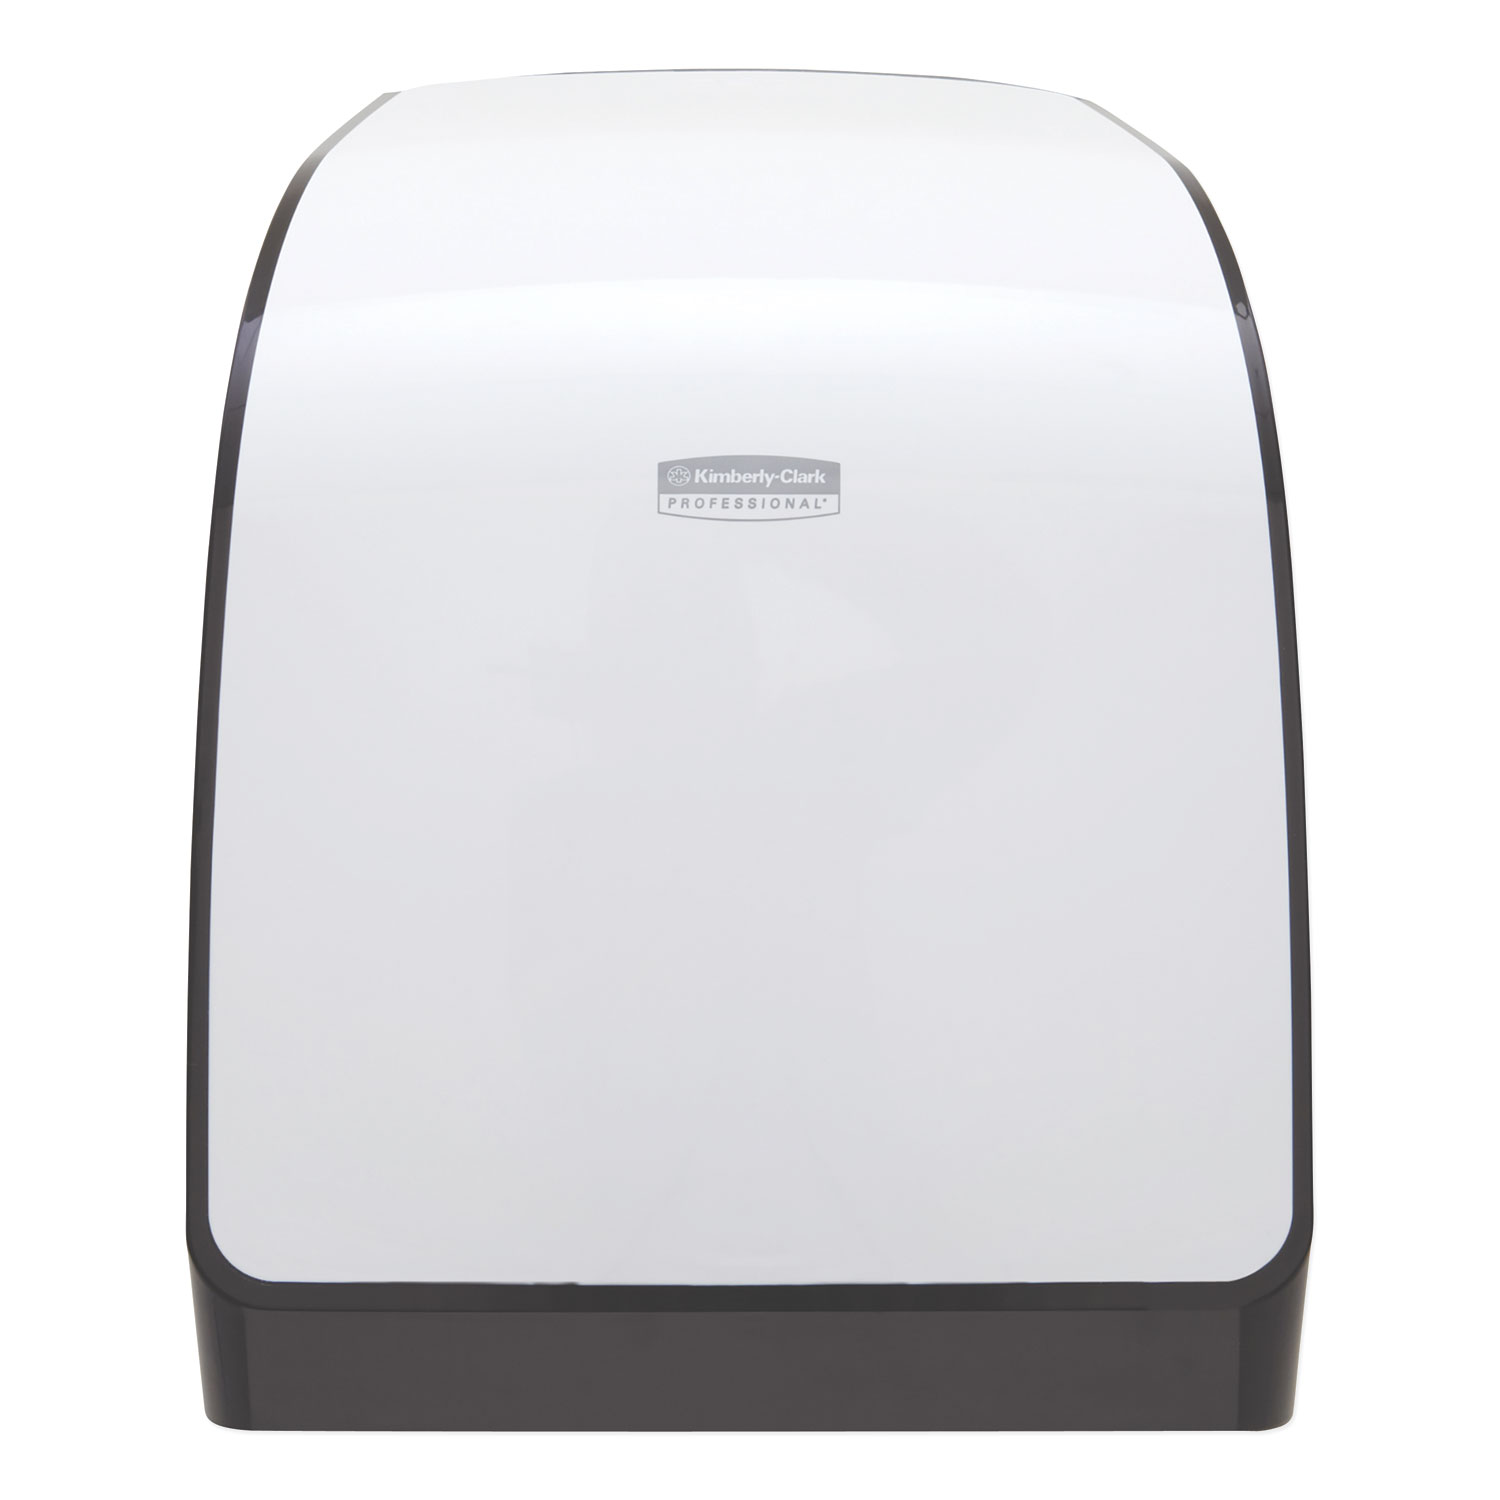  Scott KCC 34347 Pro Mod Manual Hard Roll Towel Dispenser, 12.66 x 9.18 x 16.44, White (KCC34347) 